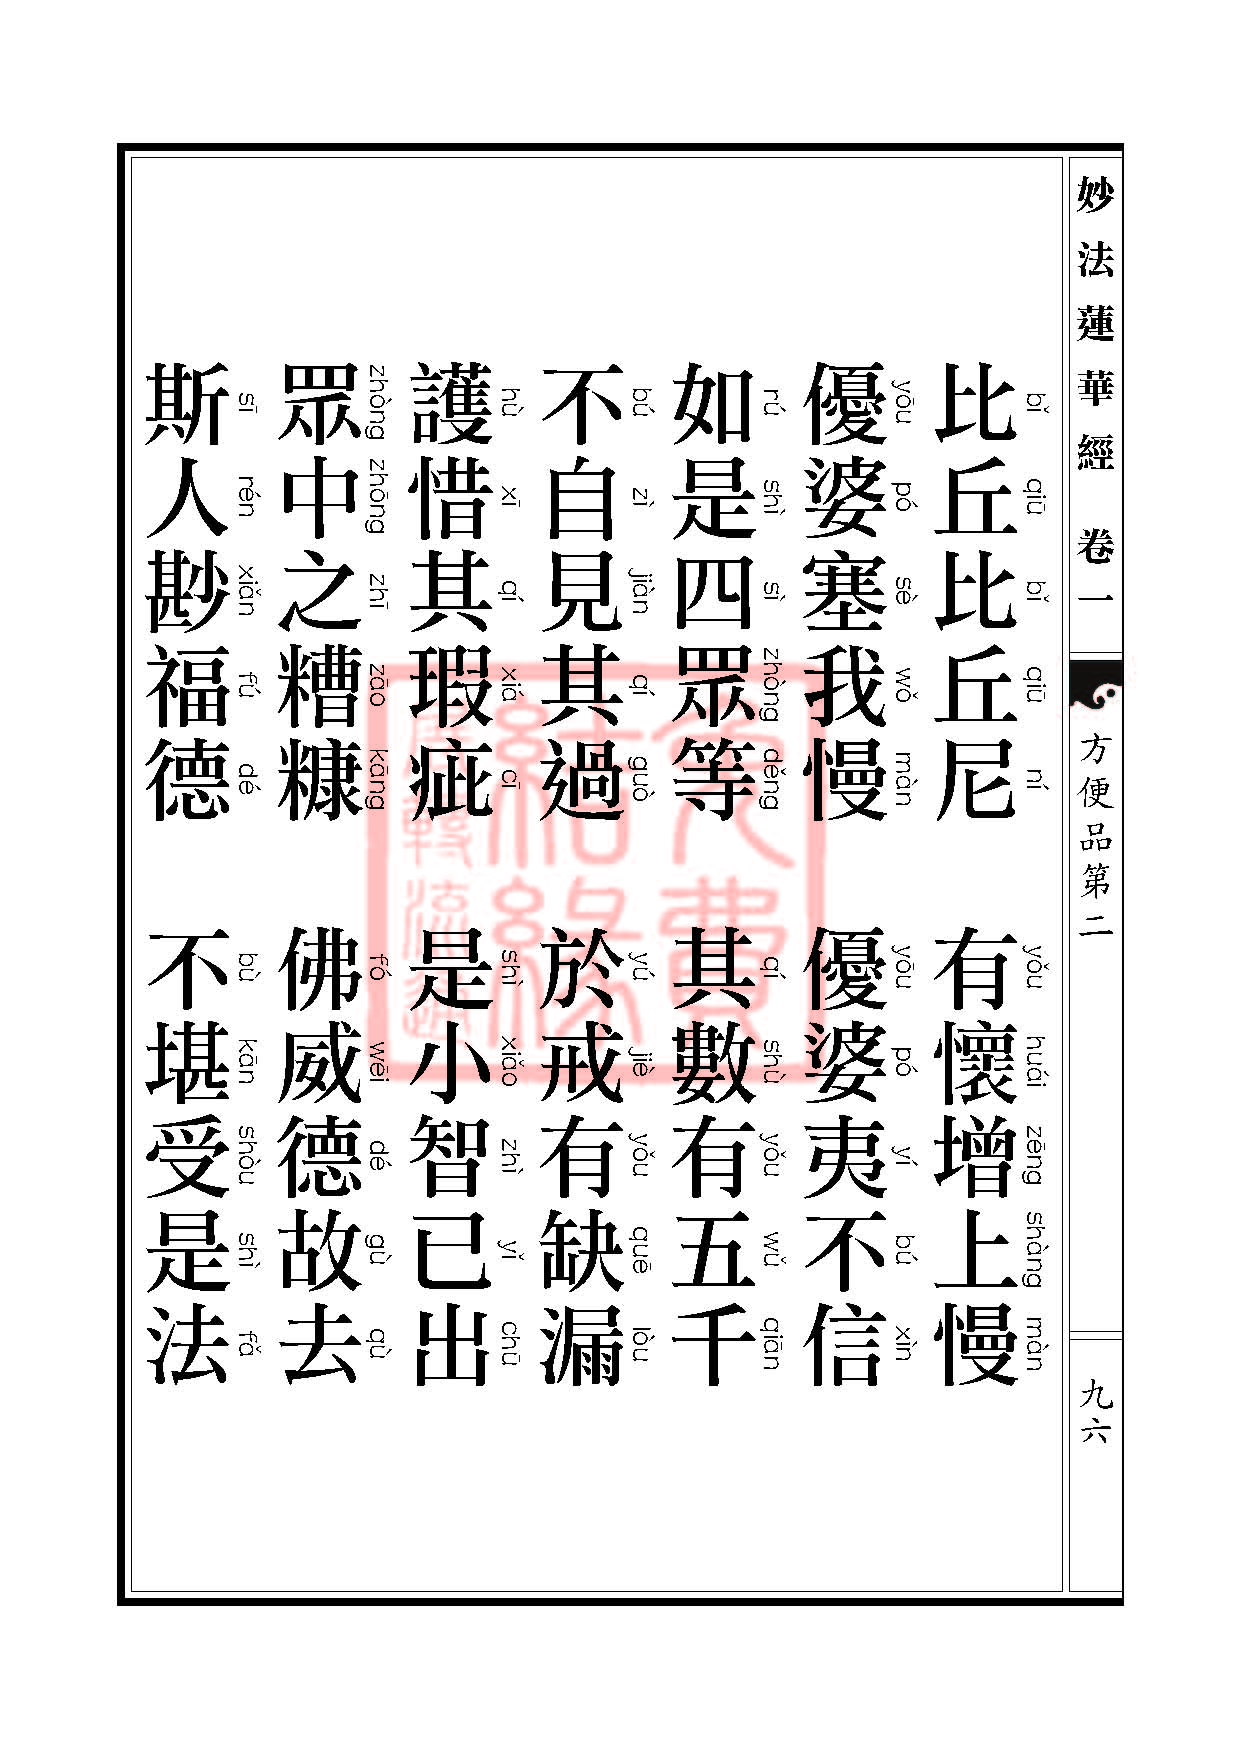 Book_FHJ_HK-A6-PY_Web_ҳ_096.jpg